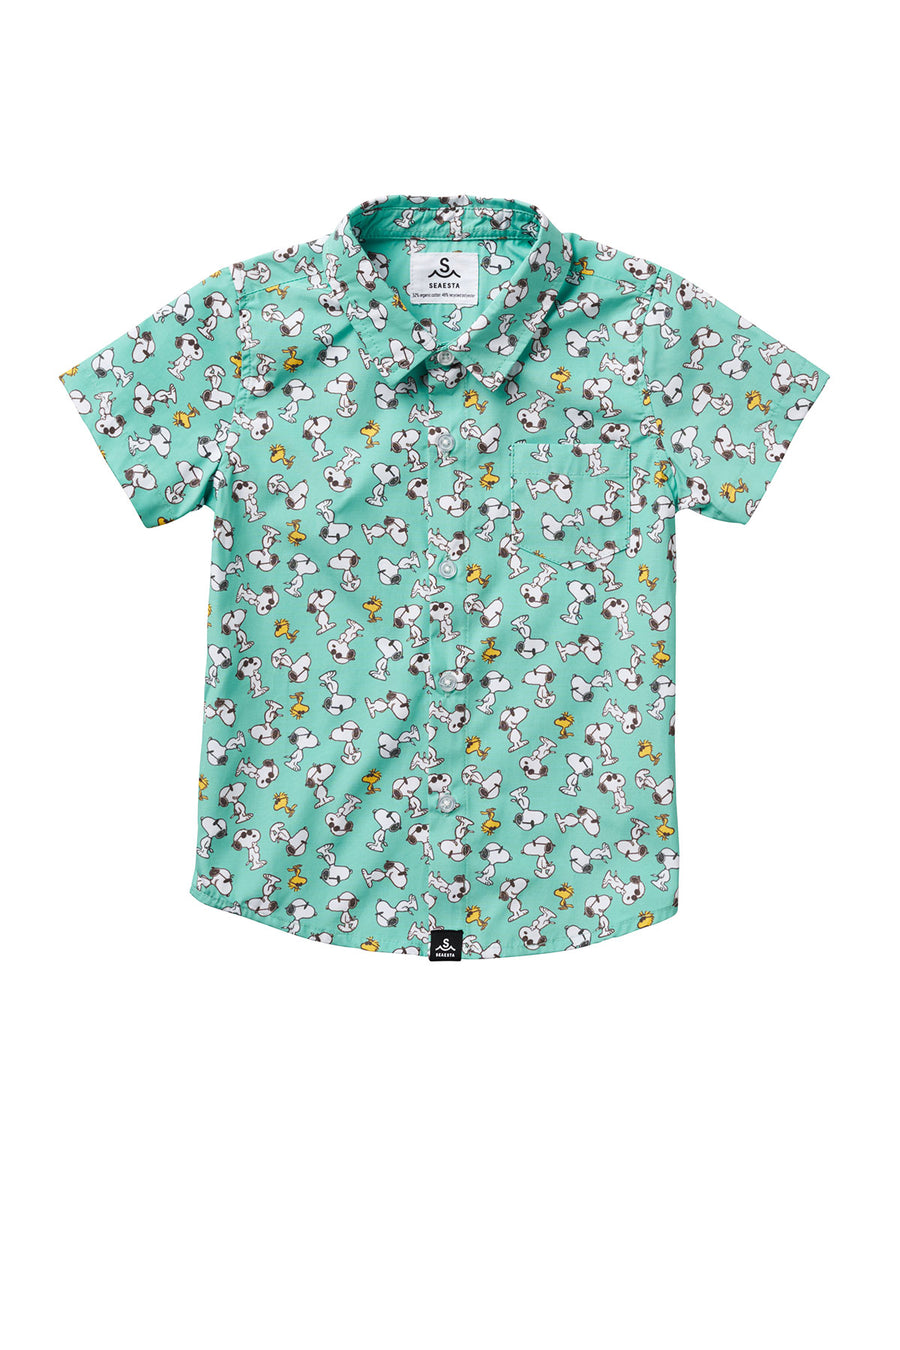 Seaesta Surf x Peanuts® Joe Cool Button Up Shirt / KIDS / Sea Glass